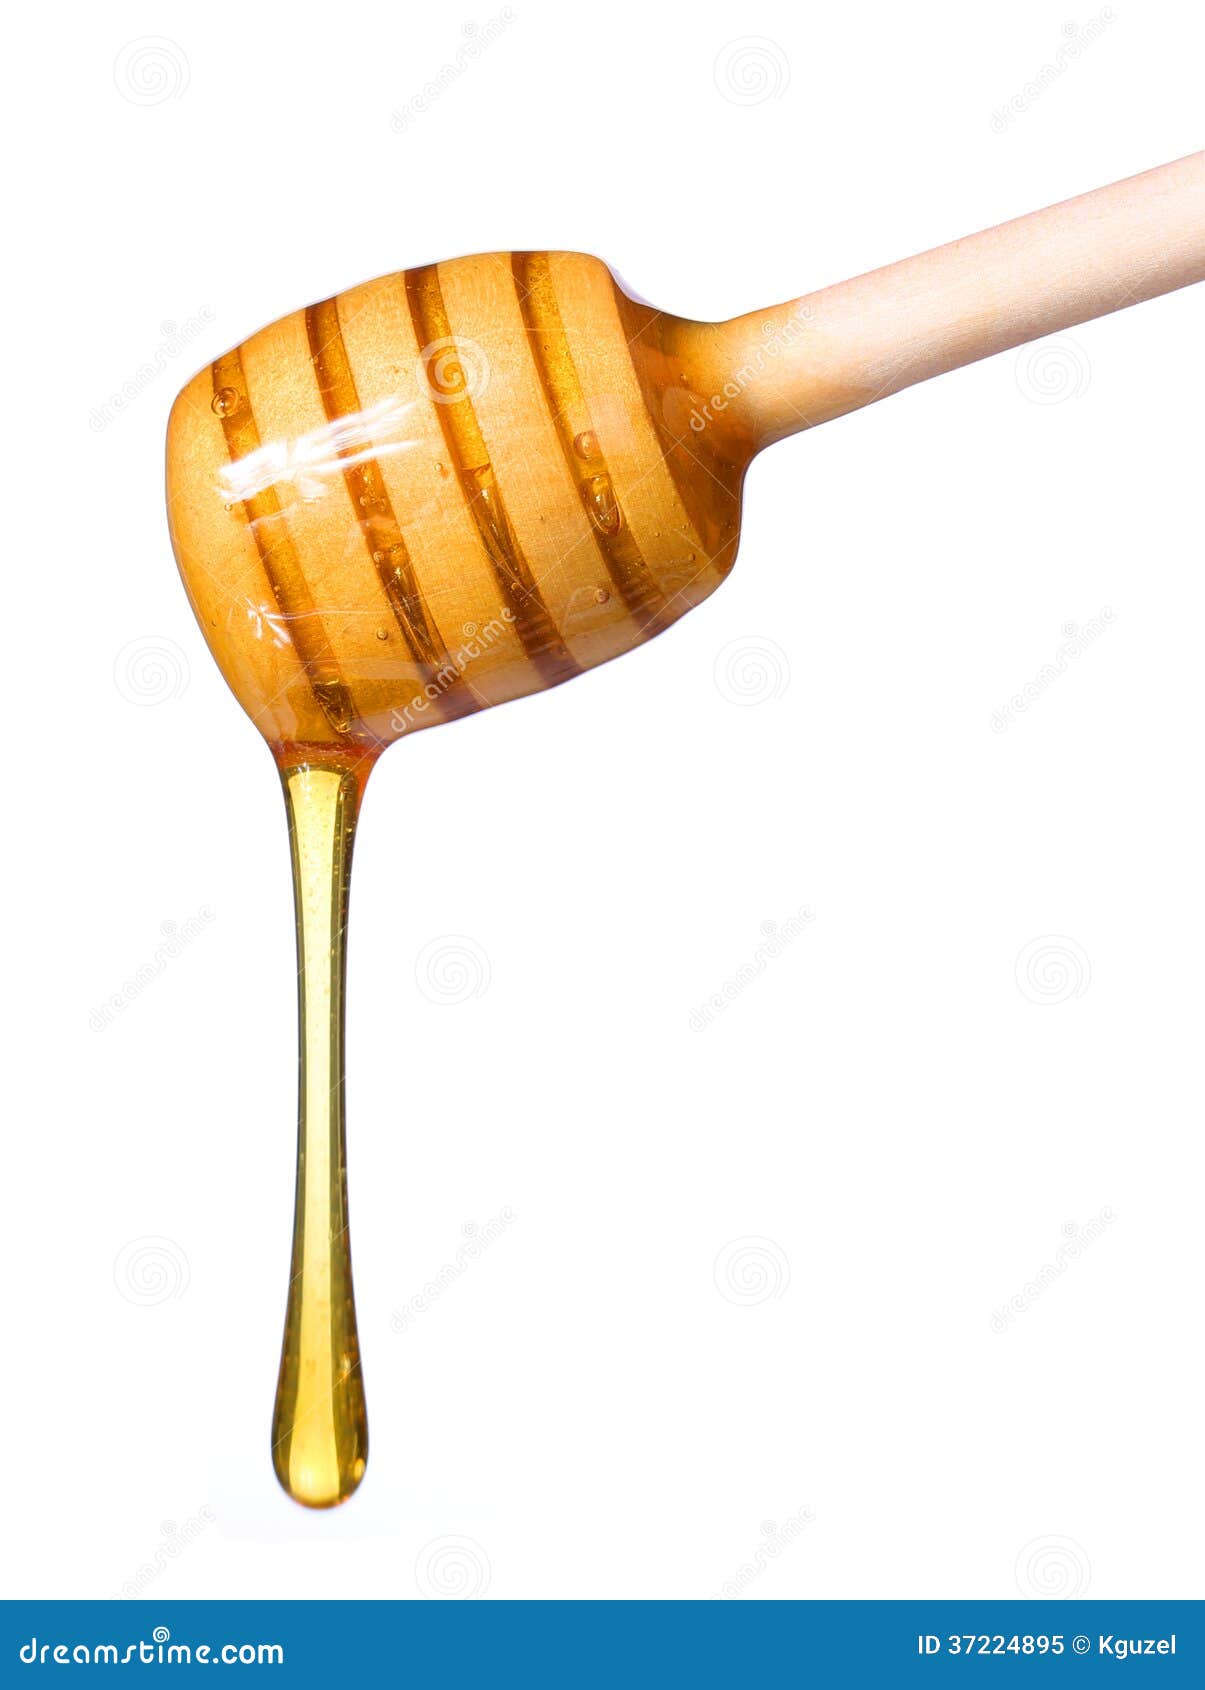 honey stick clipart - photo #6